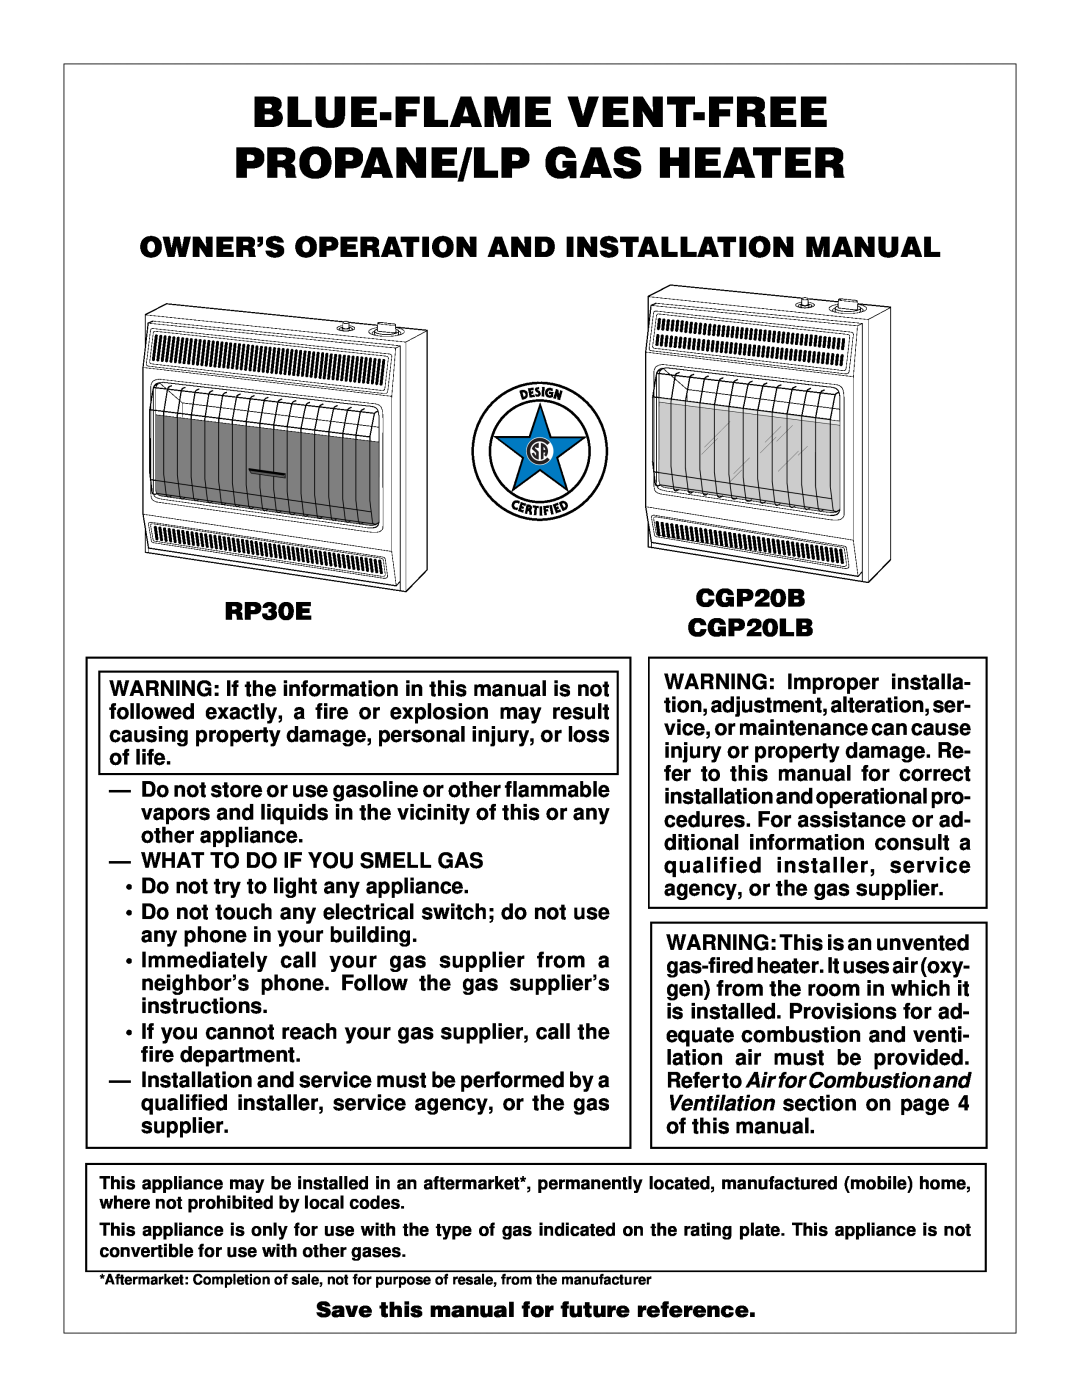 Desa CGP20B installation manual Owner’S Operation And Installation Manual, Blue-Flame Vent-Freepropane/Lp Gas Heater 